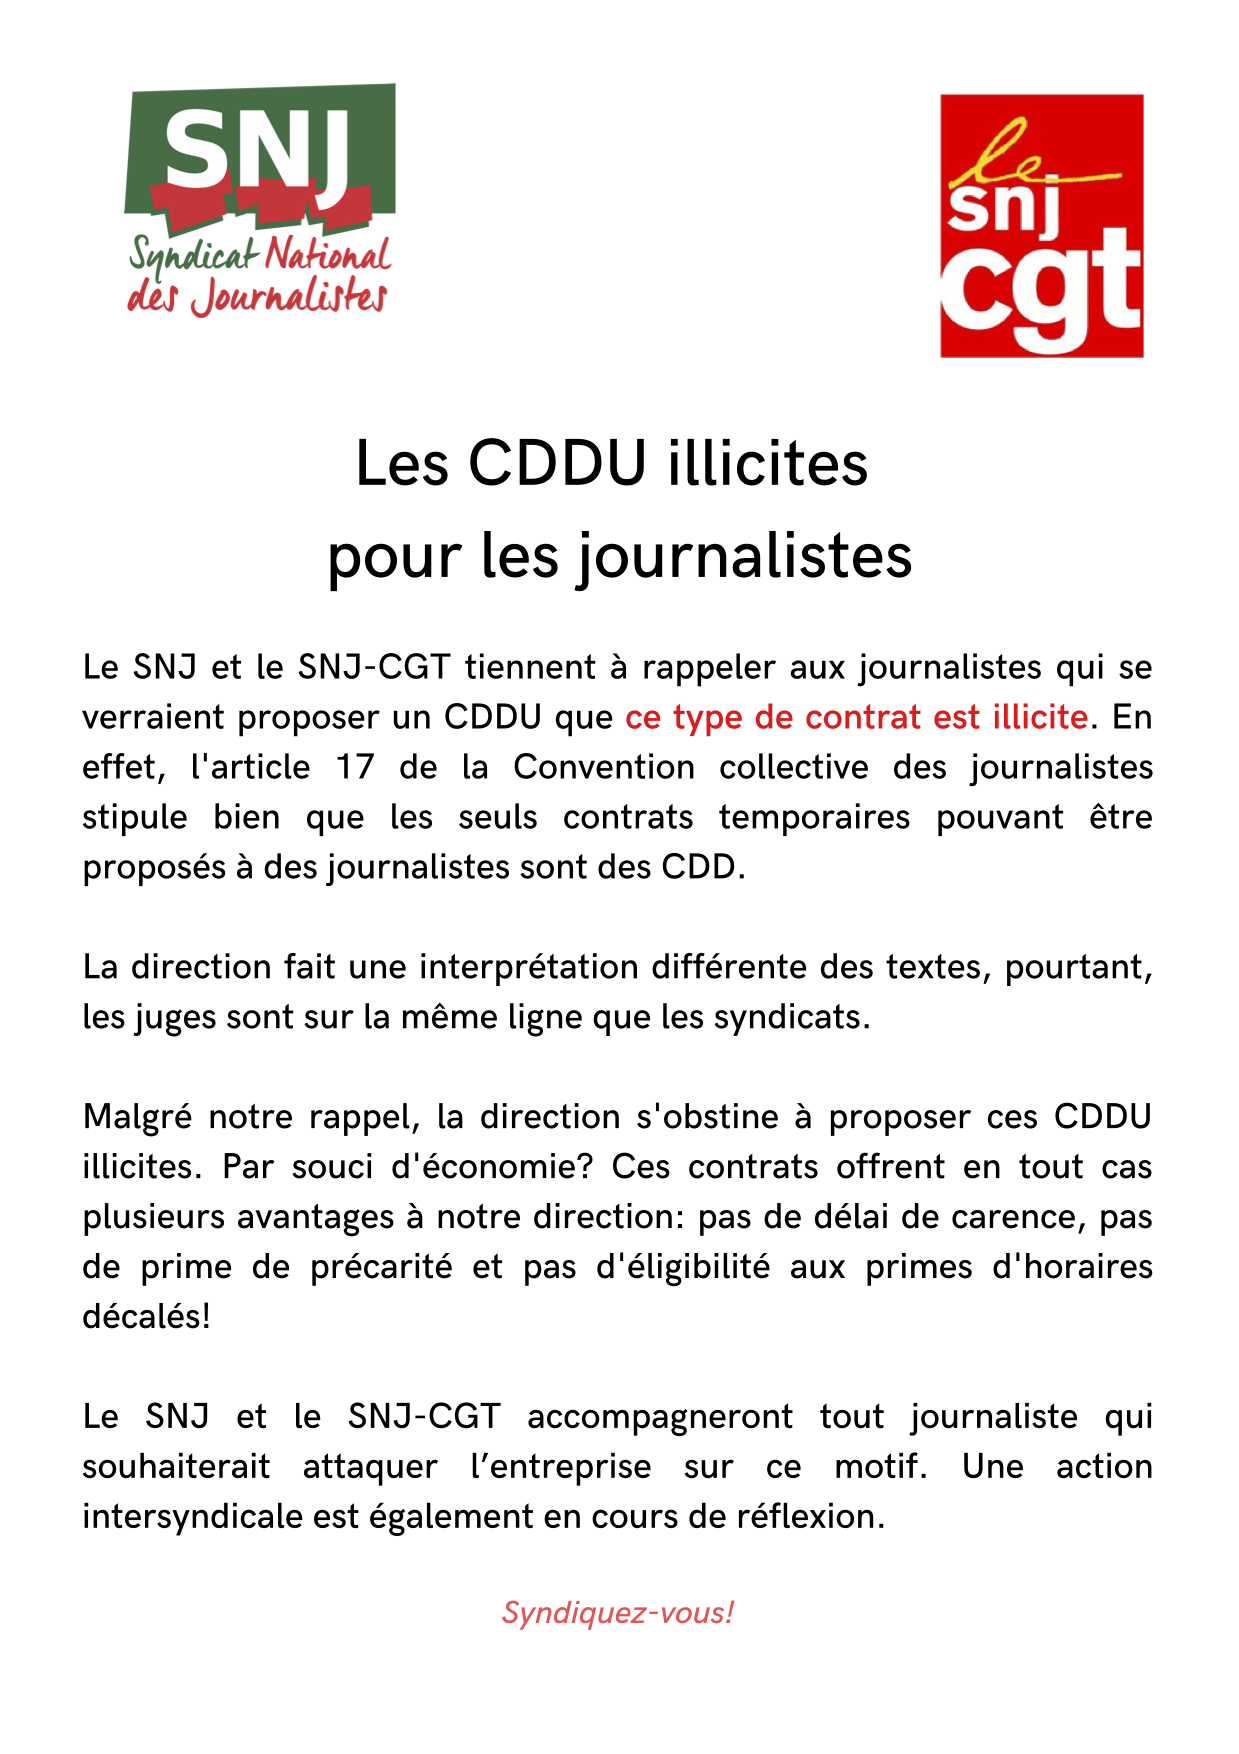 Les CDDU illicites journalistes